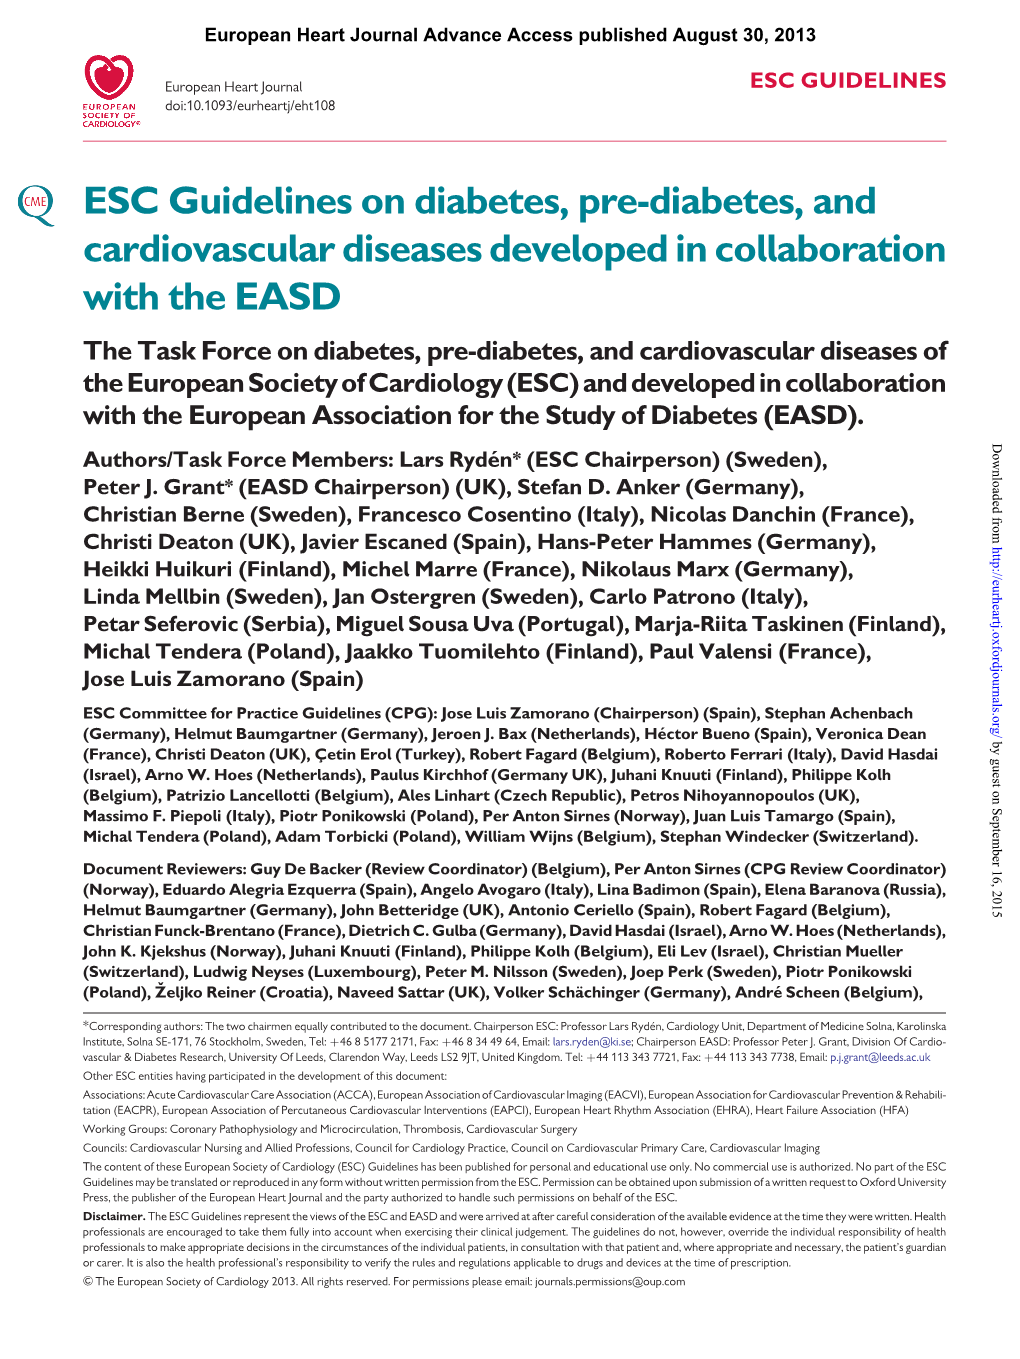 ESC Guidelines on Diabetes, Pre-Diabetes, and Cardiovascular